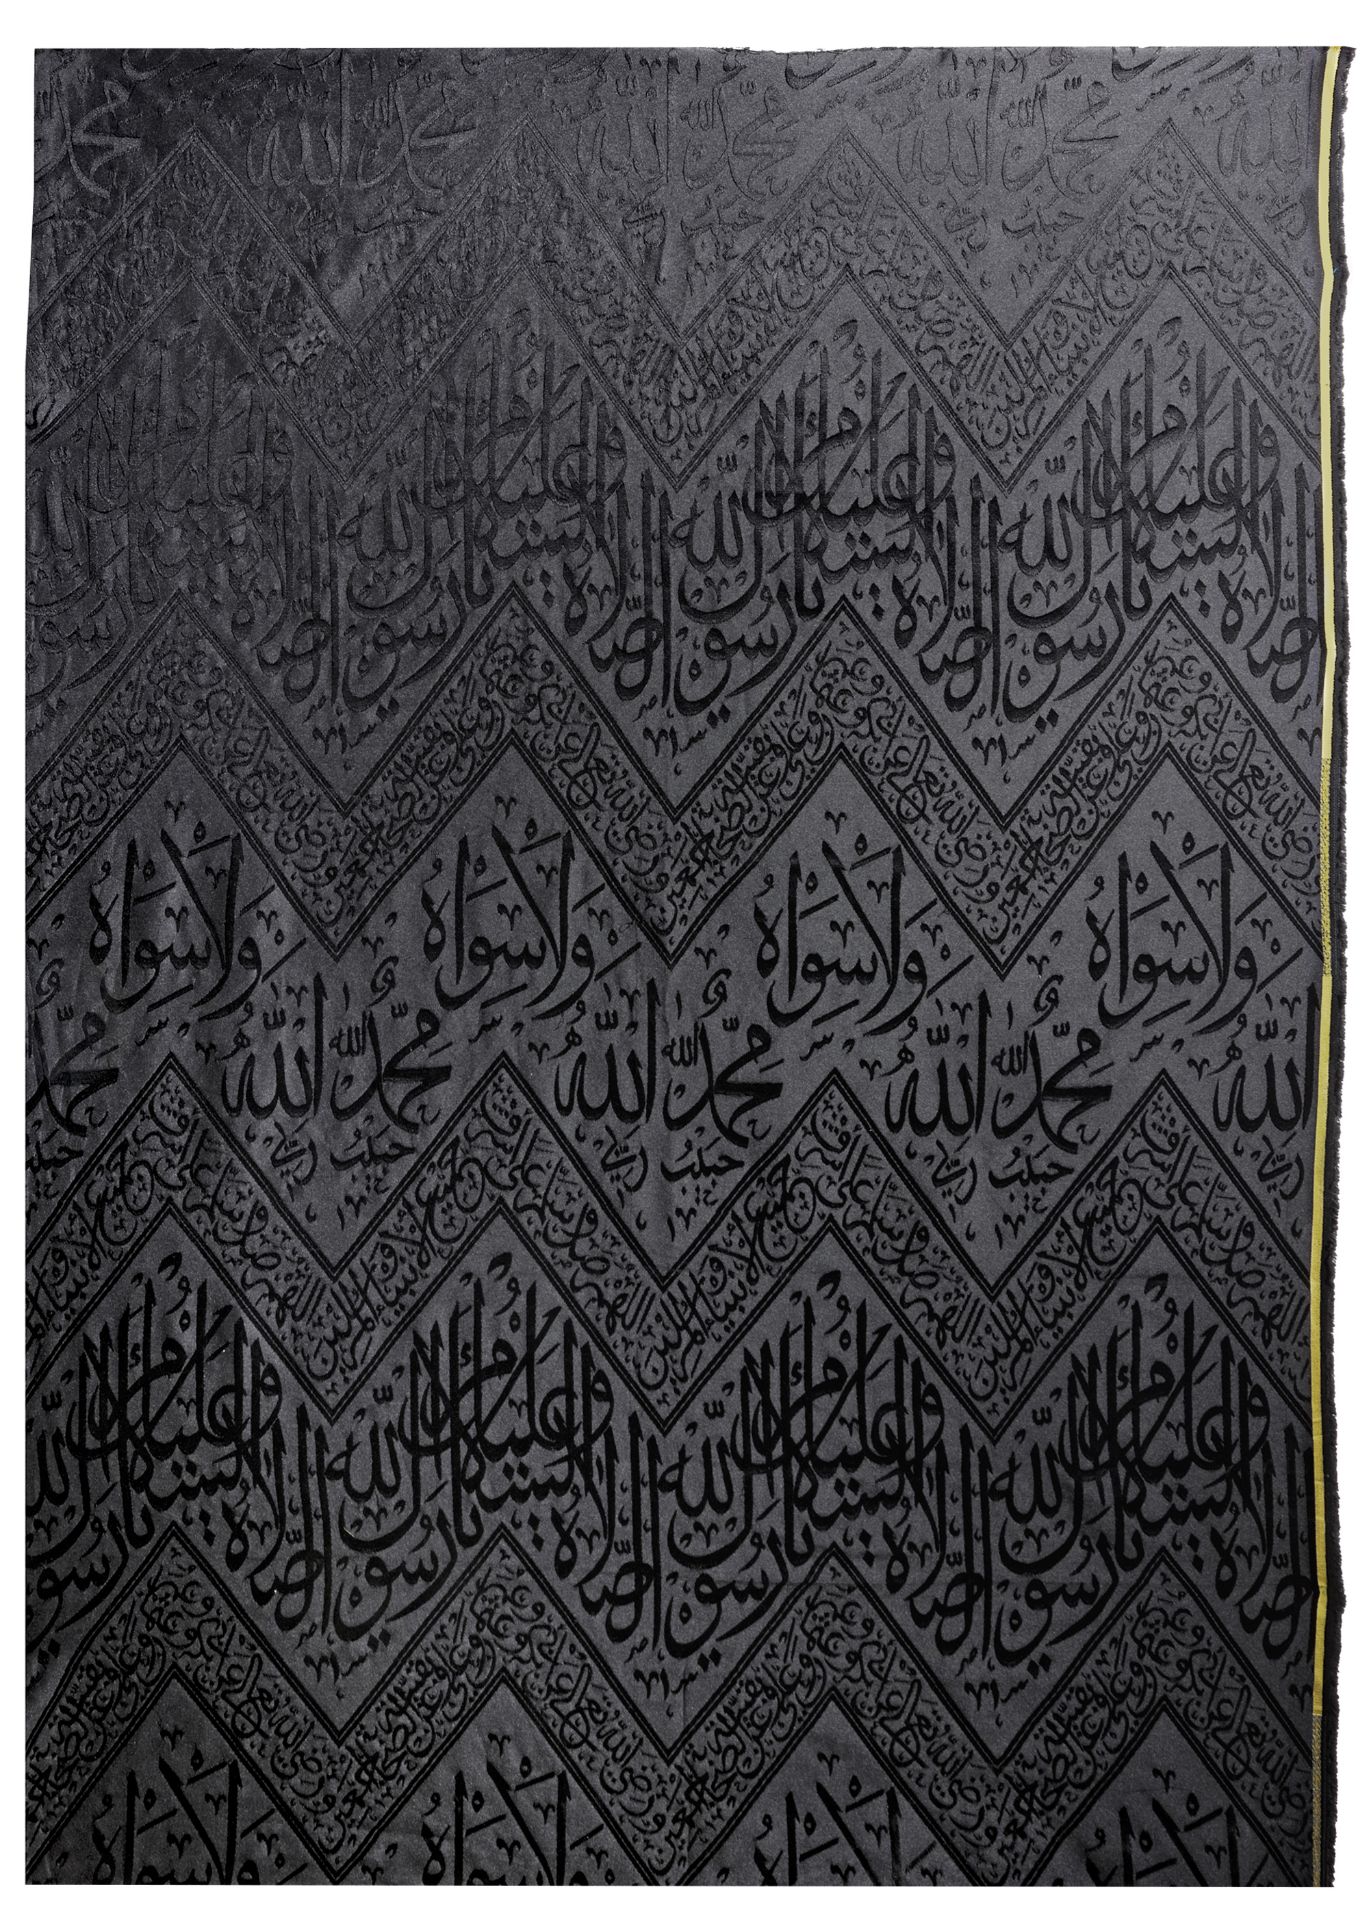 A BLACK KABAA KISWAH TEXTILE FRAGMENT, SAUDIA ARABIA, 20TH CENTURY